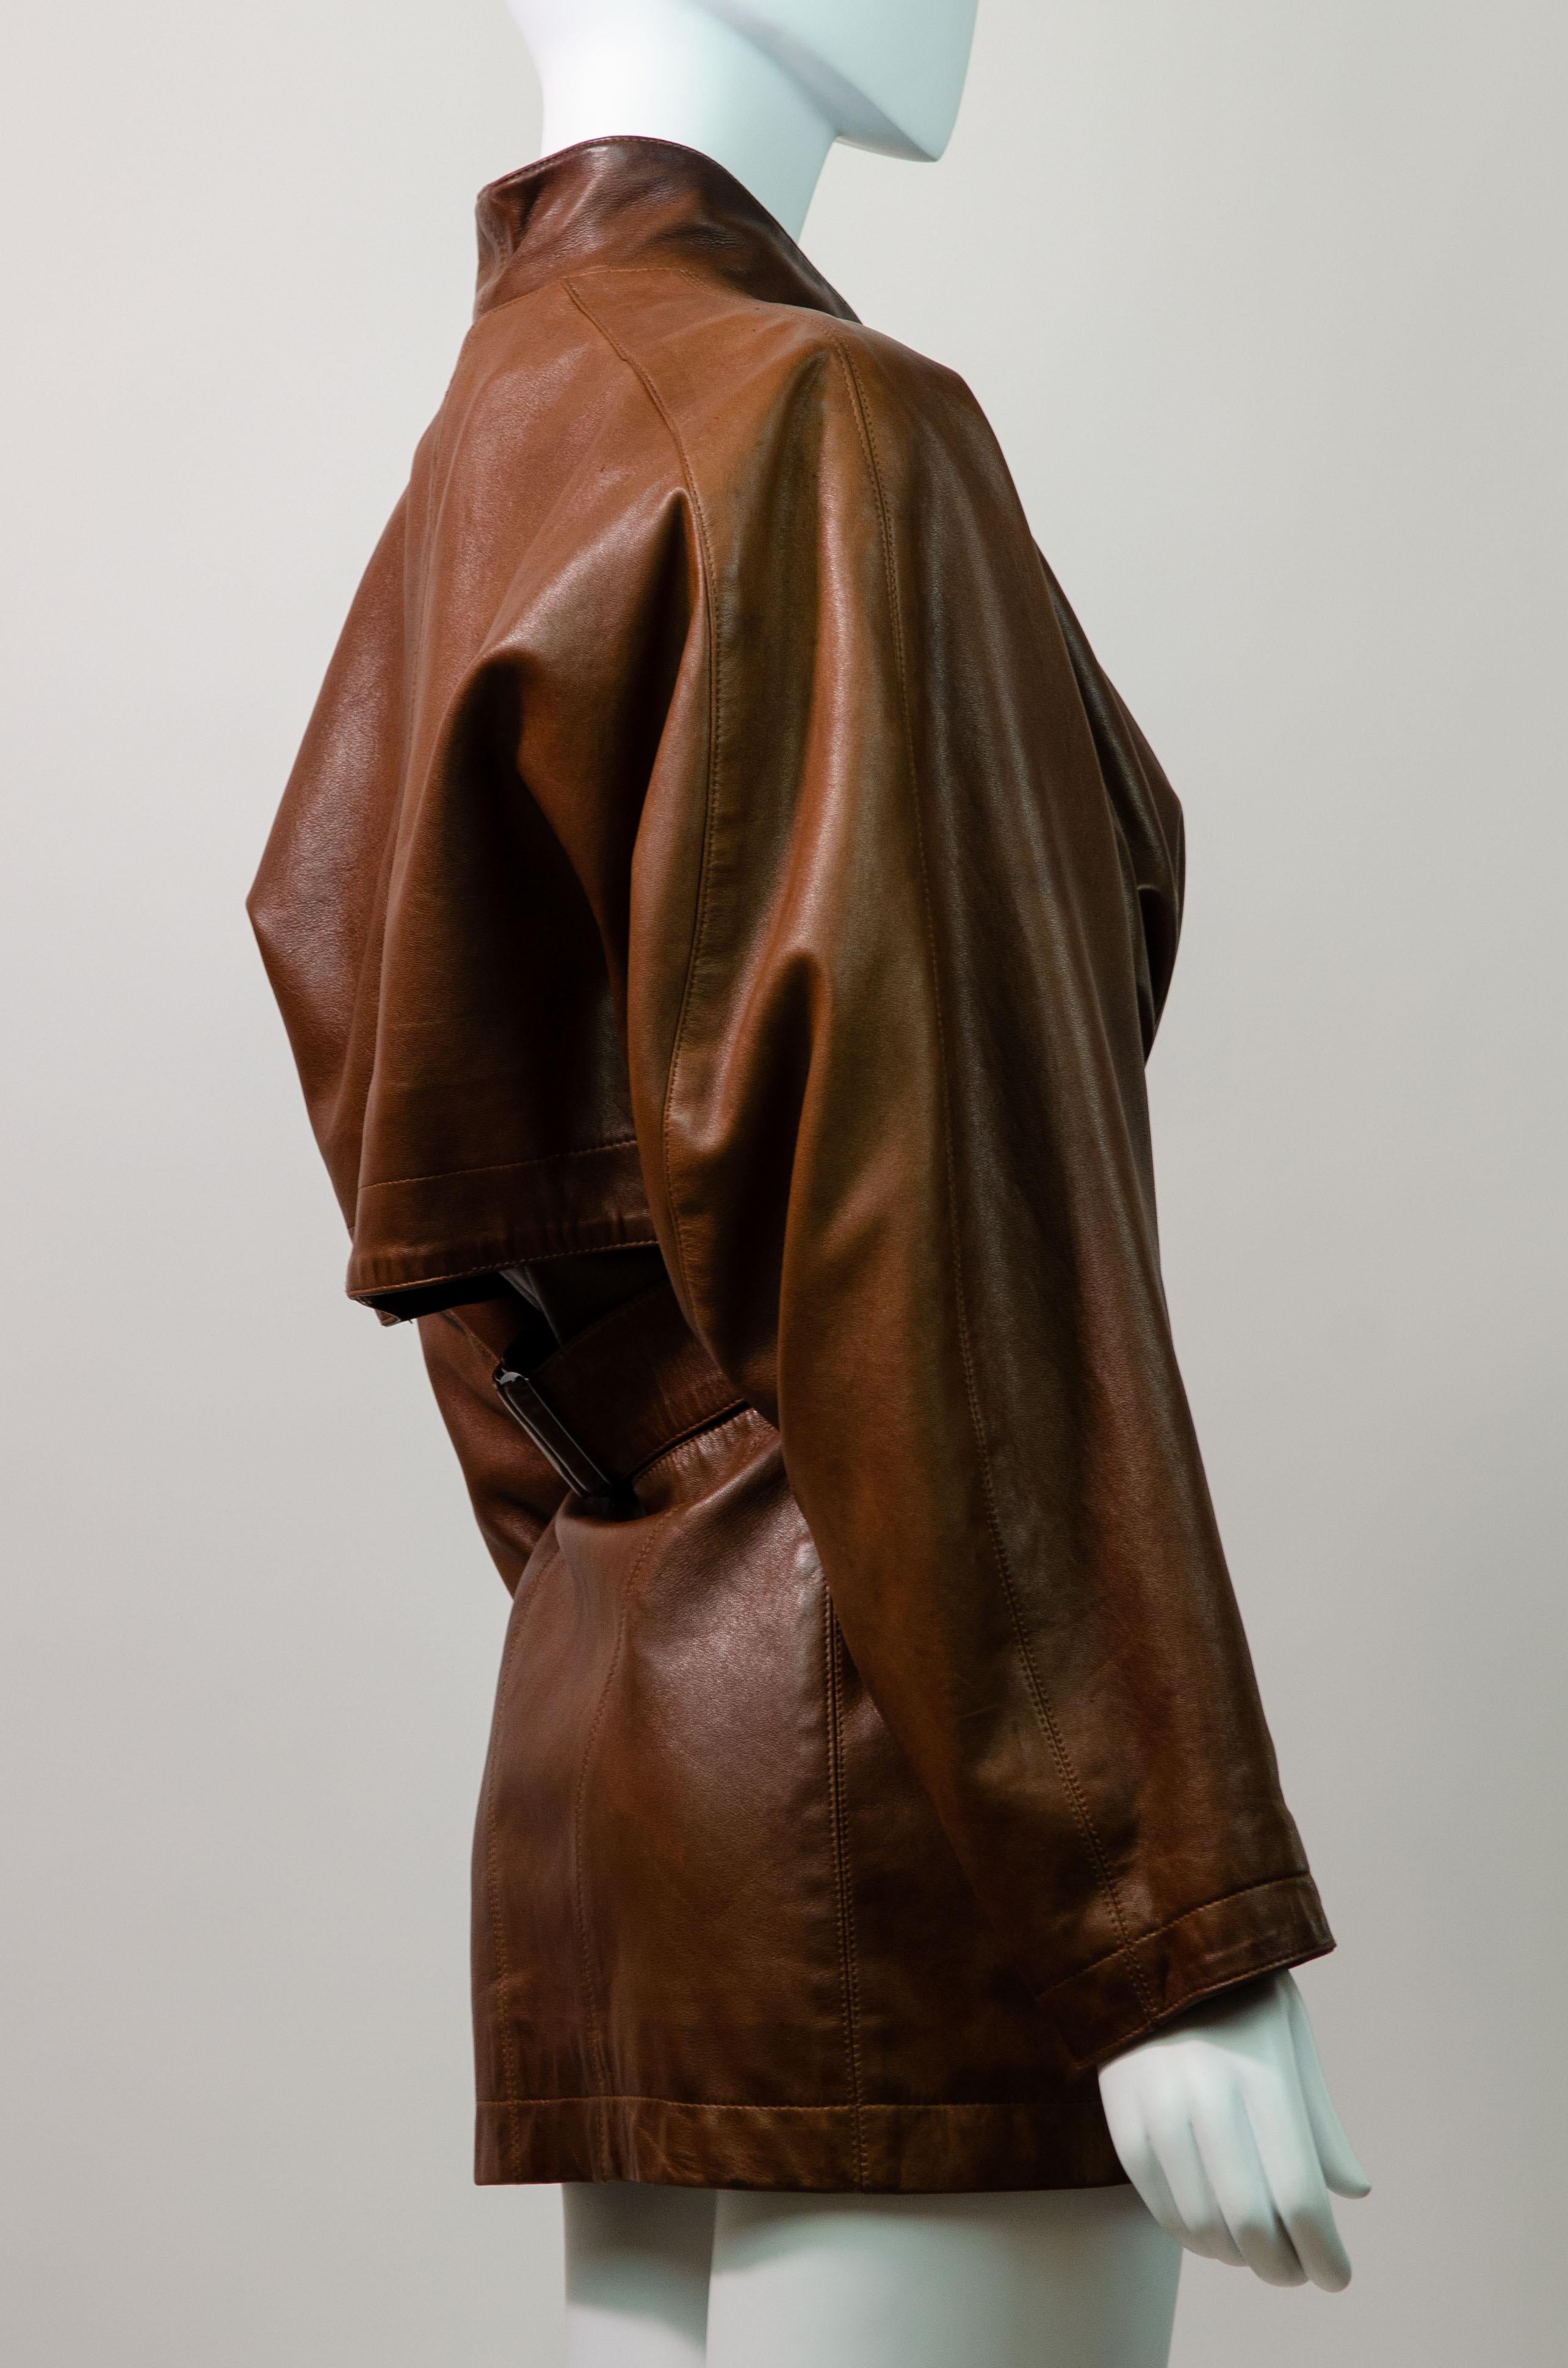 Azzedine Alaïa Vintage Early 1980s Leather Jacket As Seen On Grace Jones 1